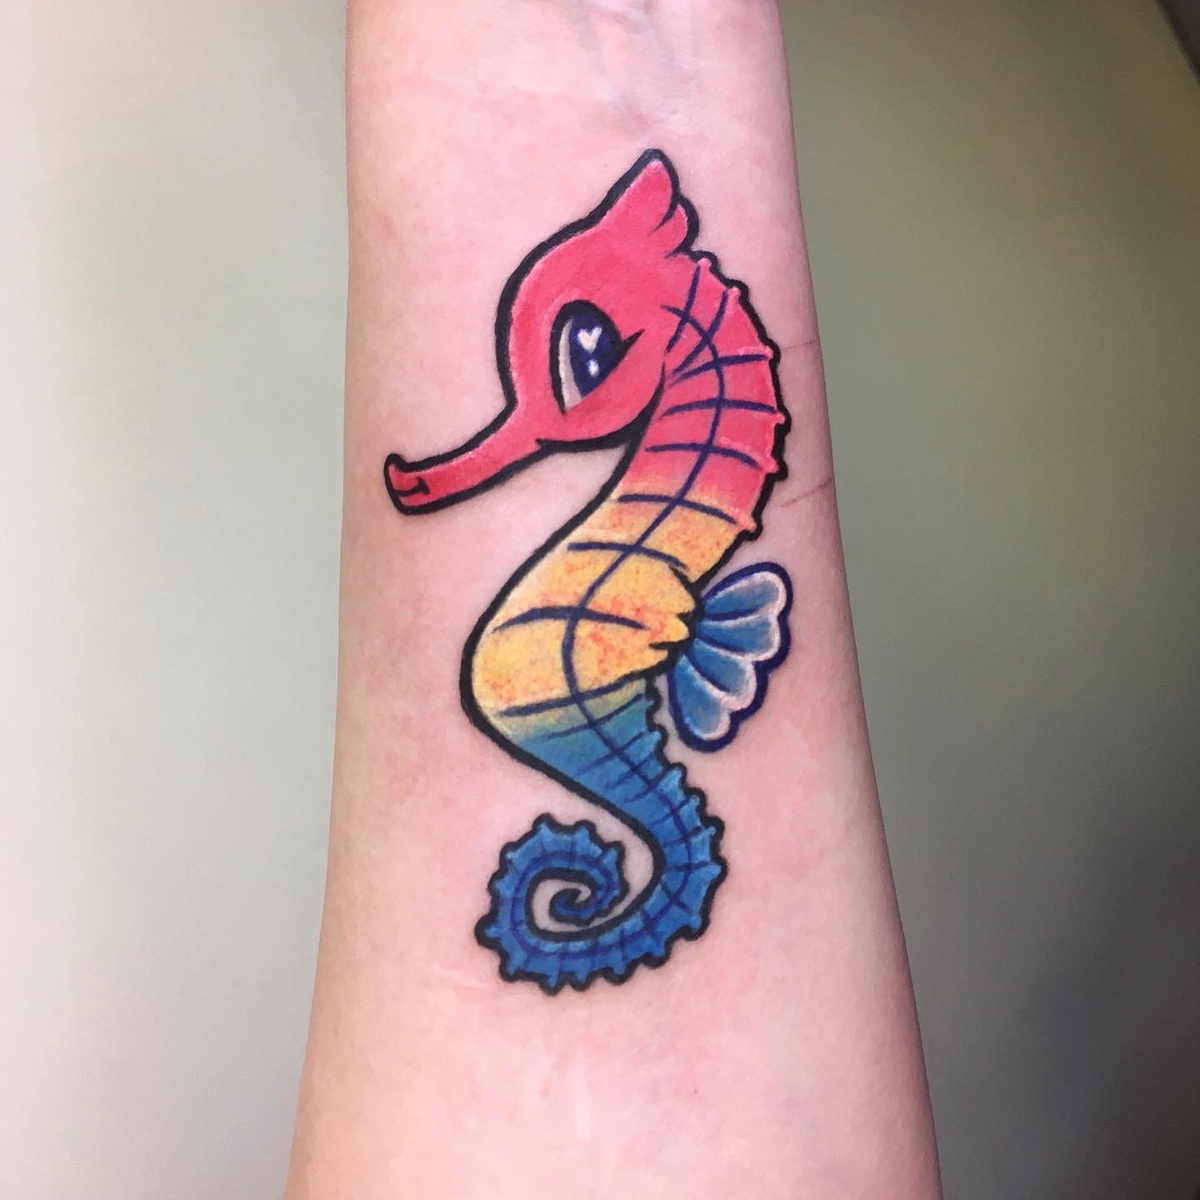 Seahorse Tattoo Ideas | POPSUGAR Beauty